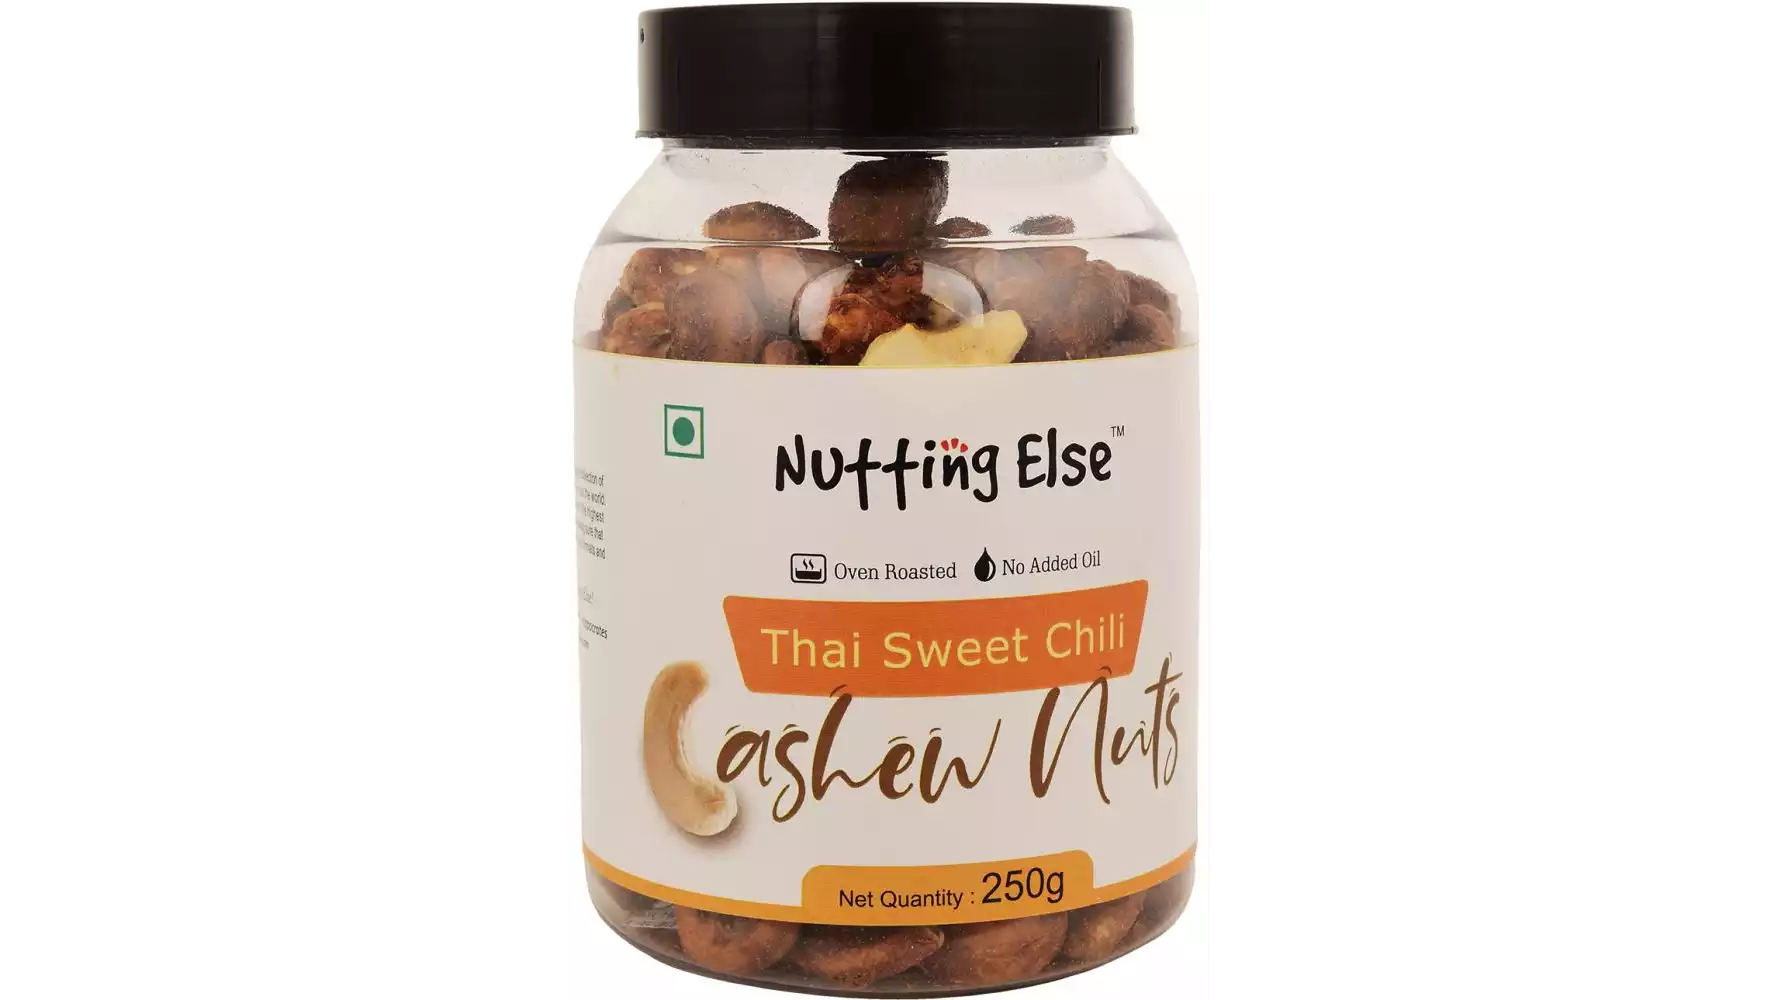 Nutting Else Thai Sweet Chili Cashew Nuts (250g)